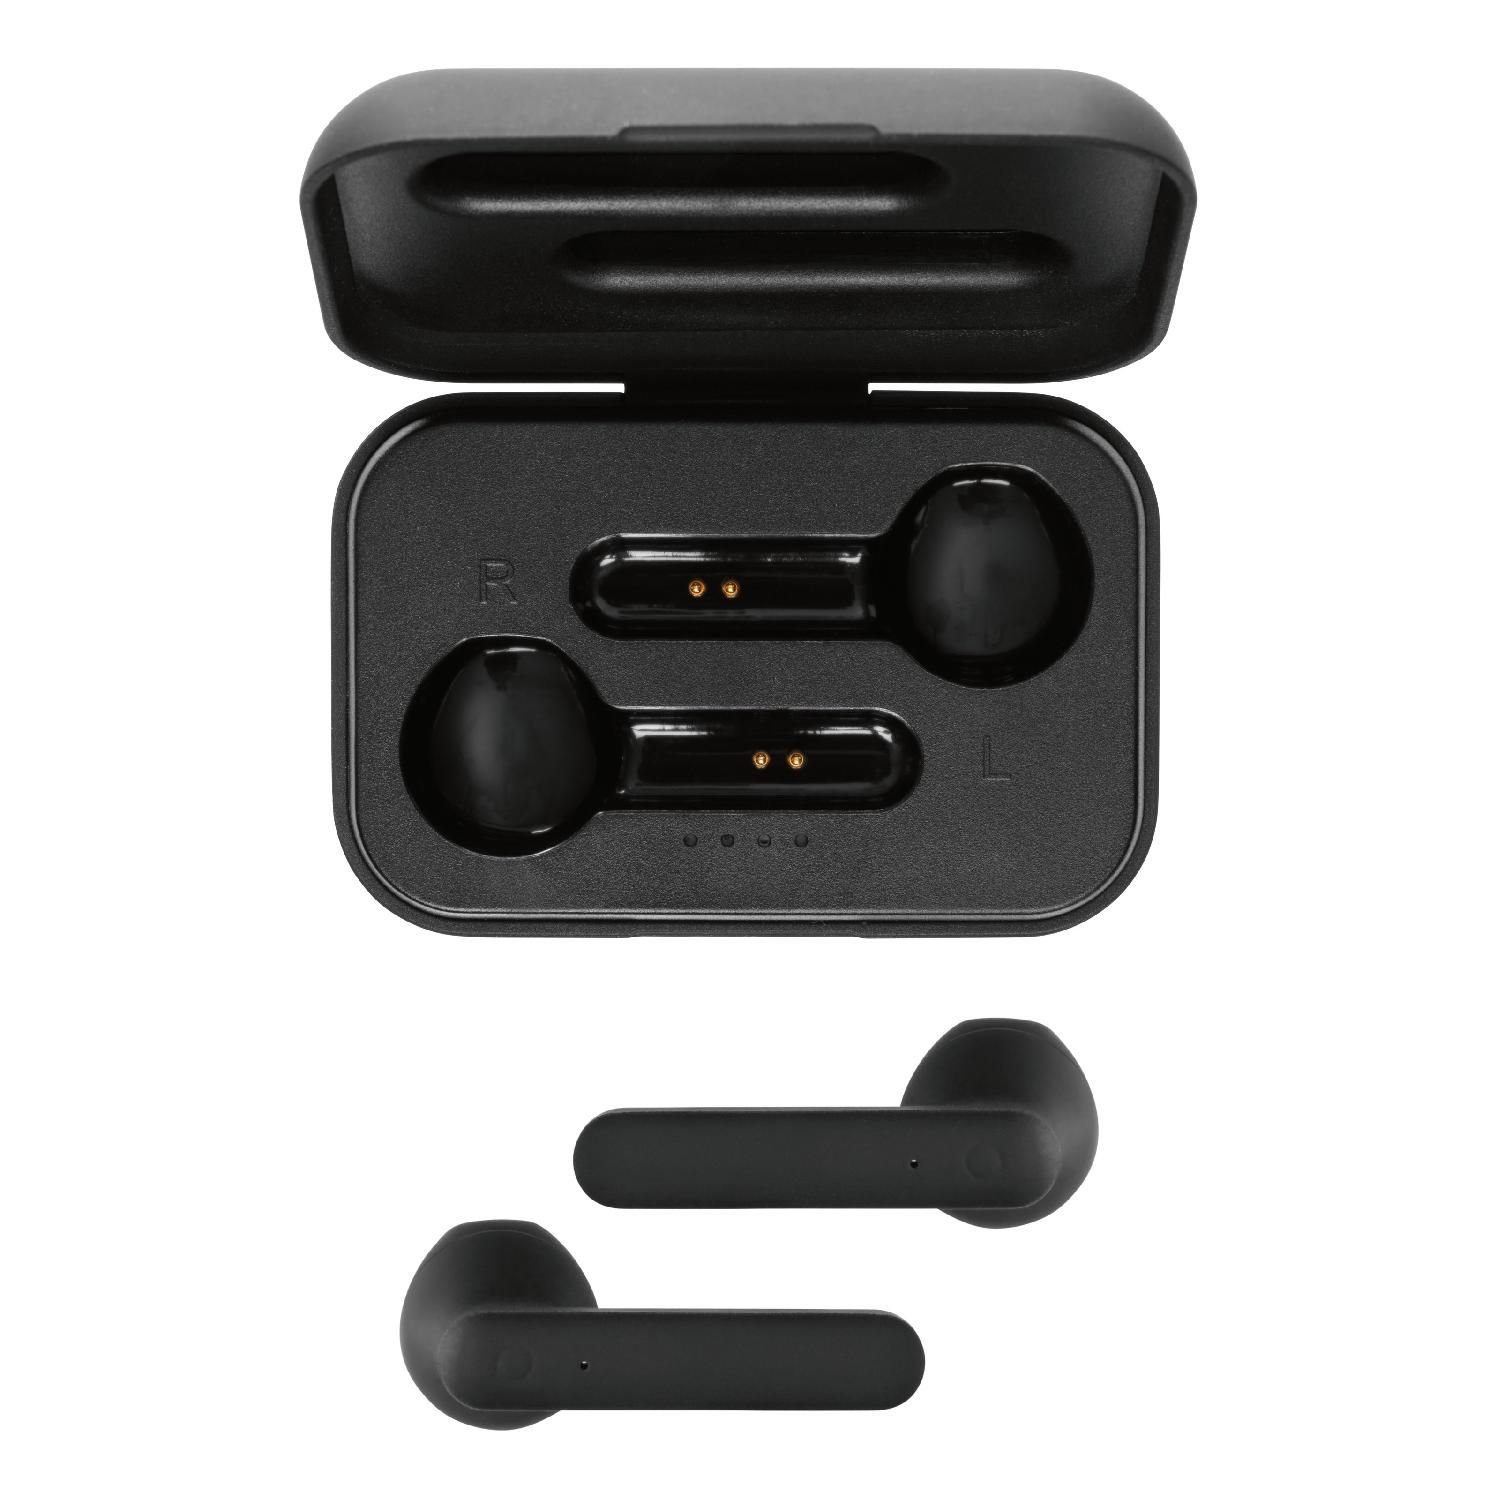 TWS-104 Kopfhörer Bluetooth Kopfhörer 5 STREETZ Herstellergarantie) Touchcontrol Mikrofon, Kabellos inkl. Jahre (integriertes Semi-In-Ear